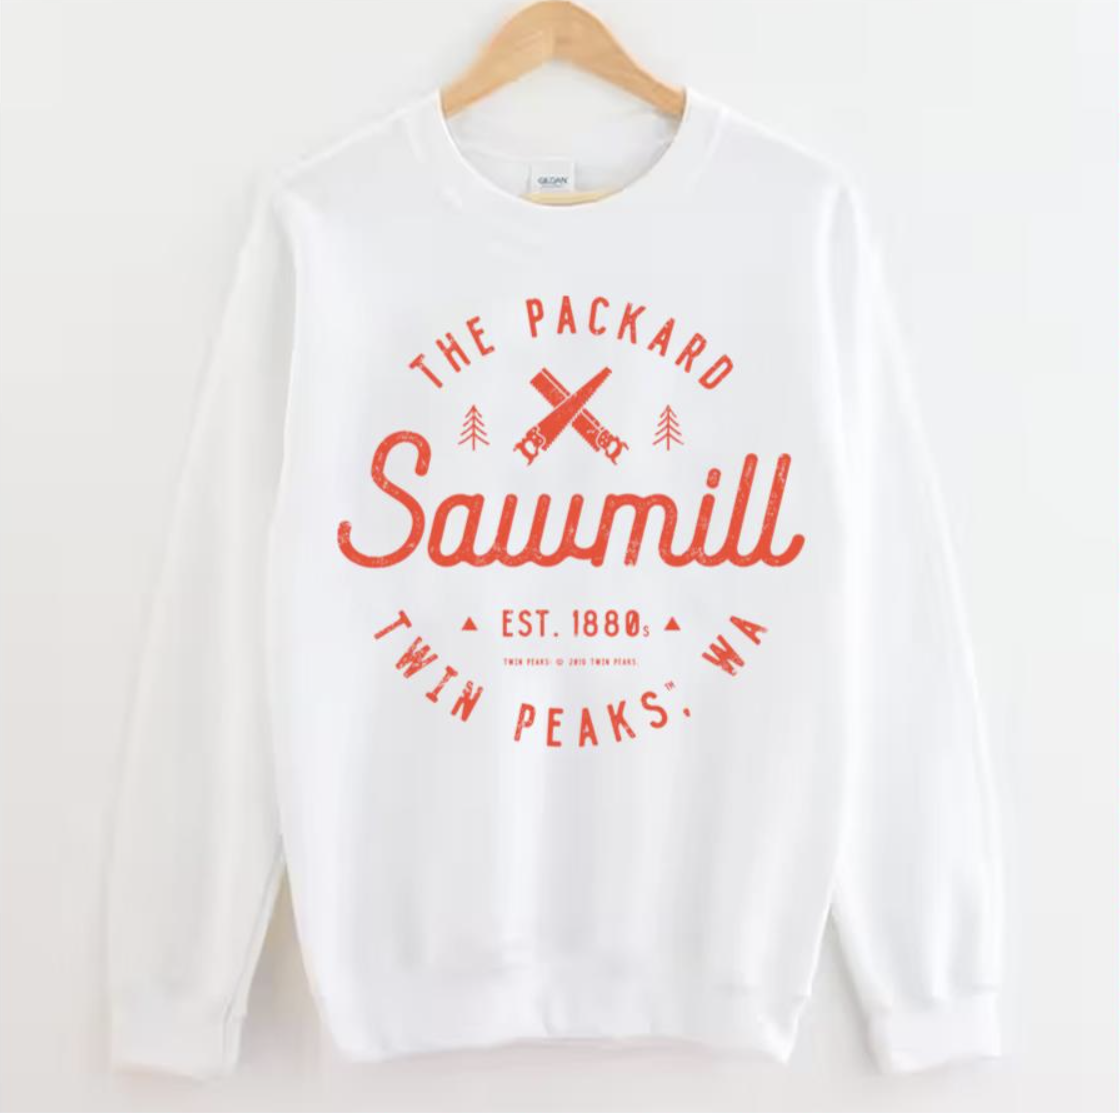 The Packard Sawmill Twin Peaks shirt